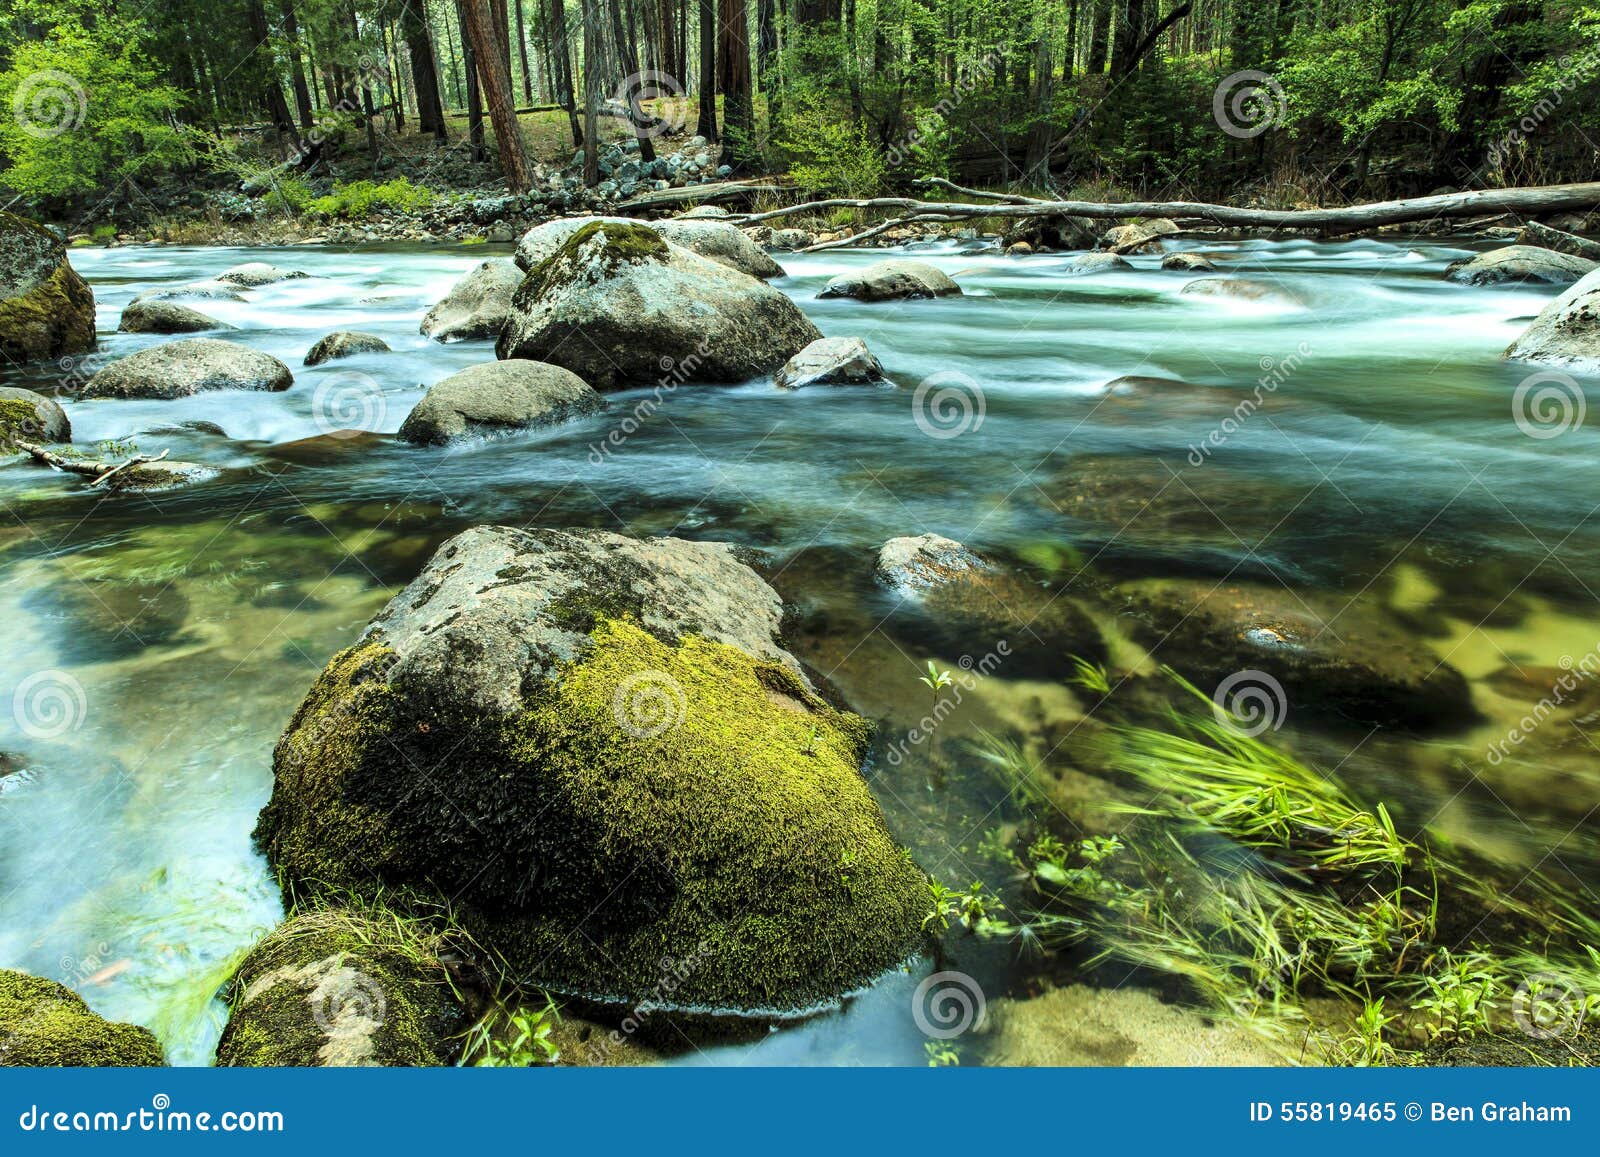 merced river yosemite california